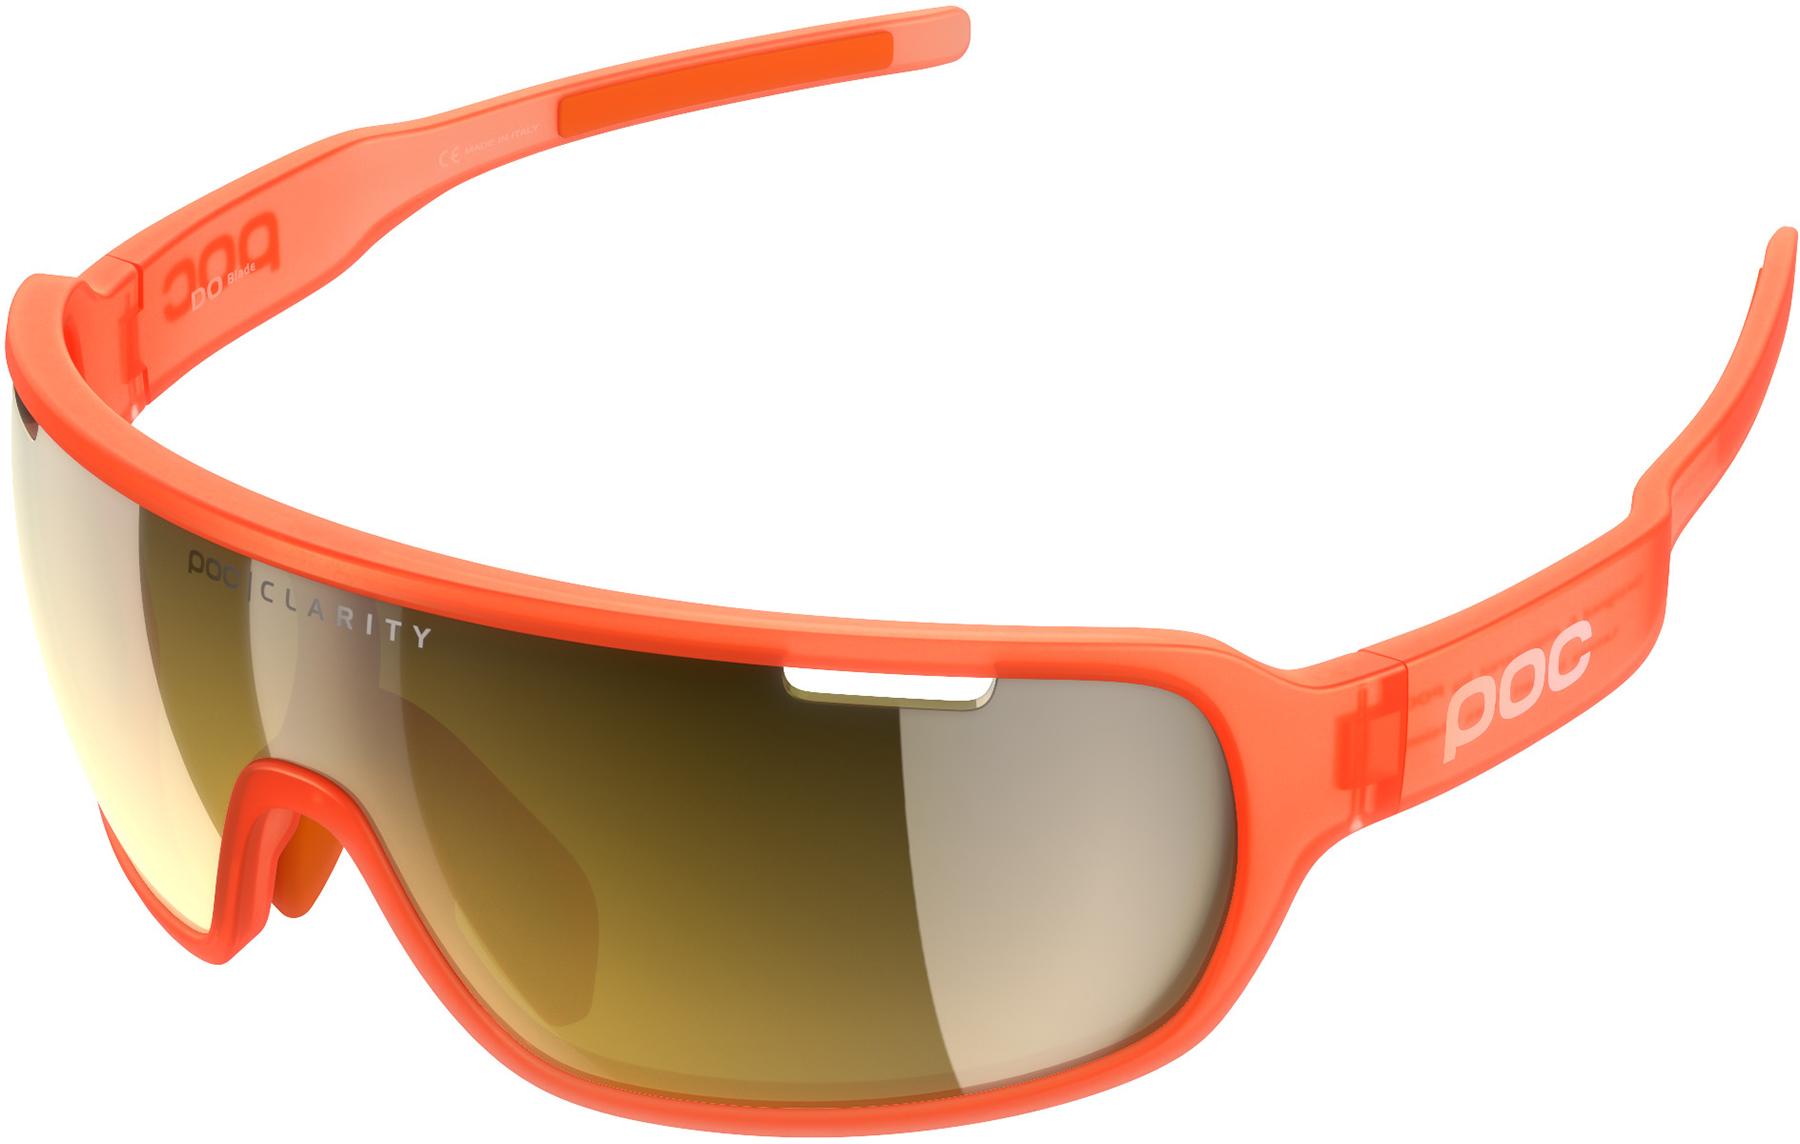 Poc Do Blade Clarity Sunglasses - Fluorescent Orange Translucent